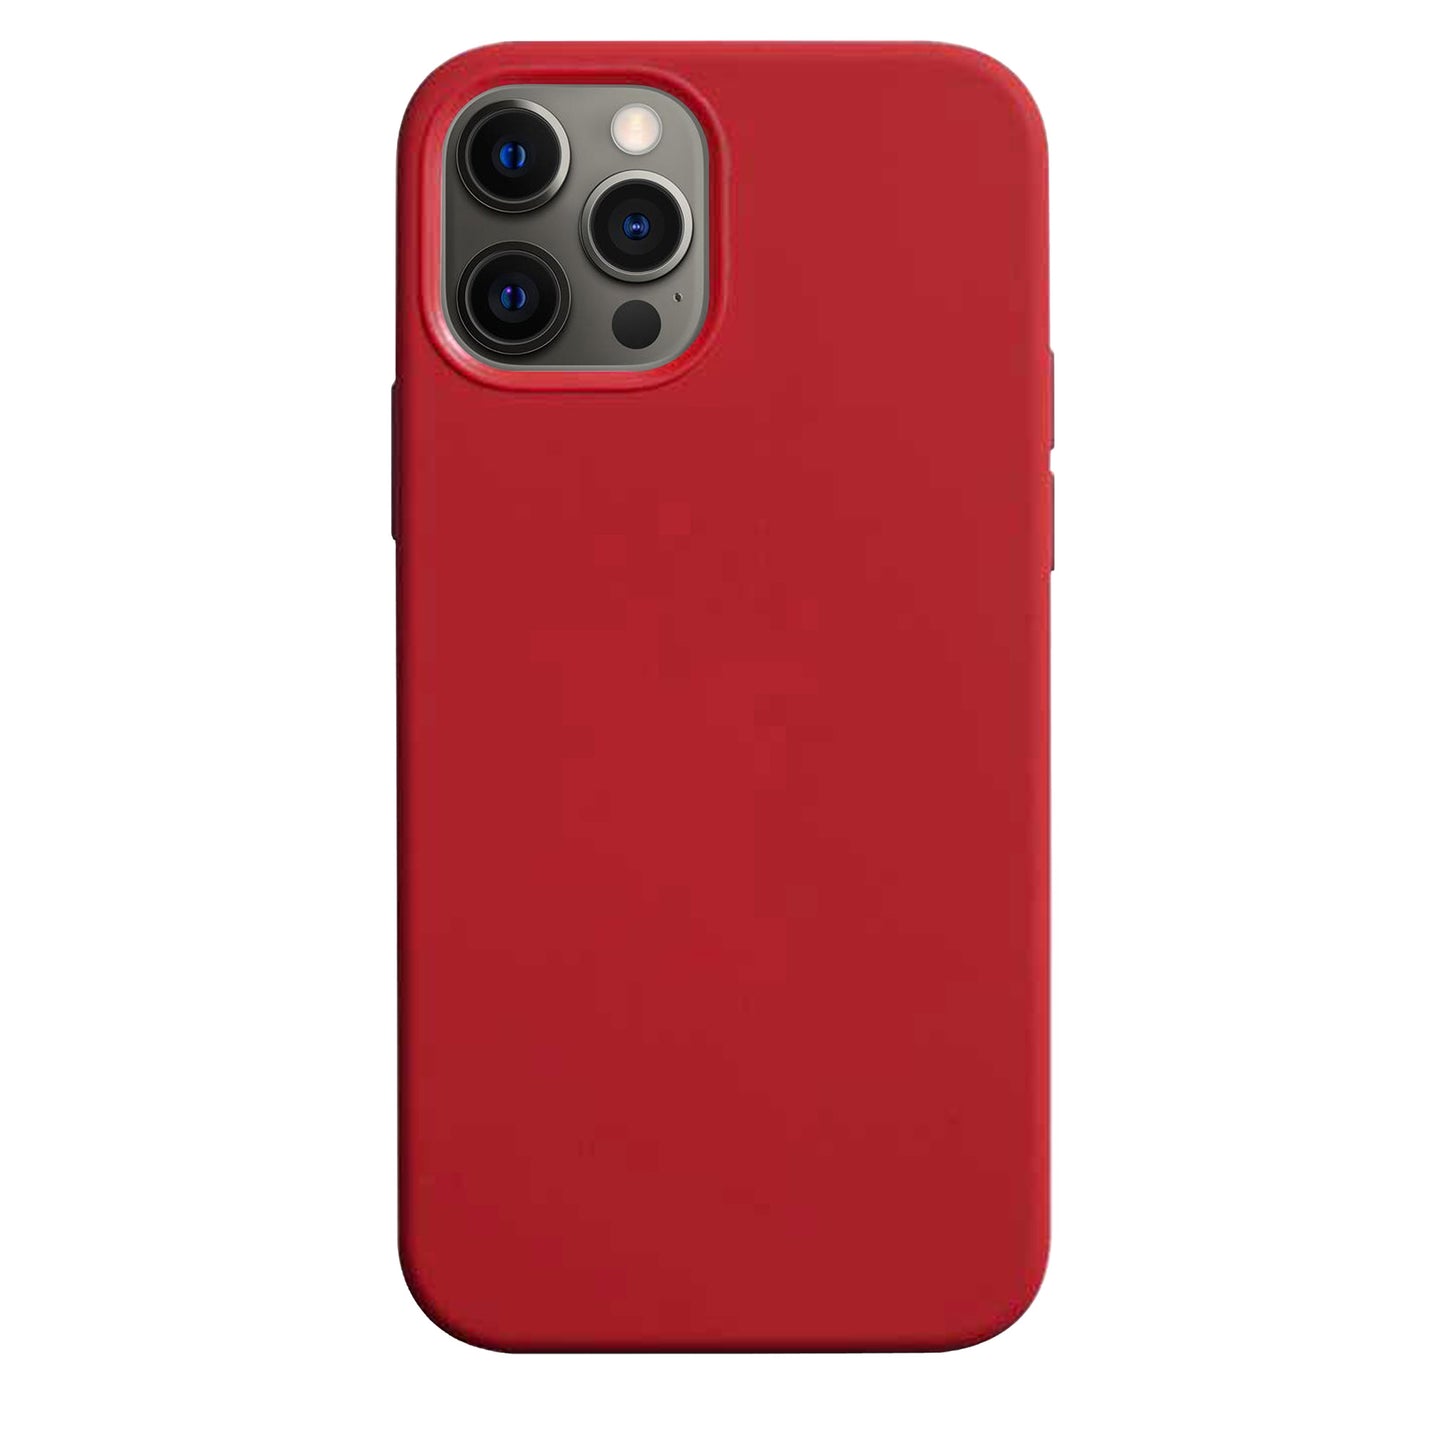 Red Silikon Hülle für iPhone